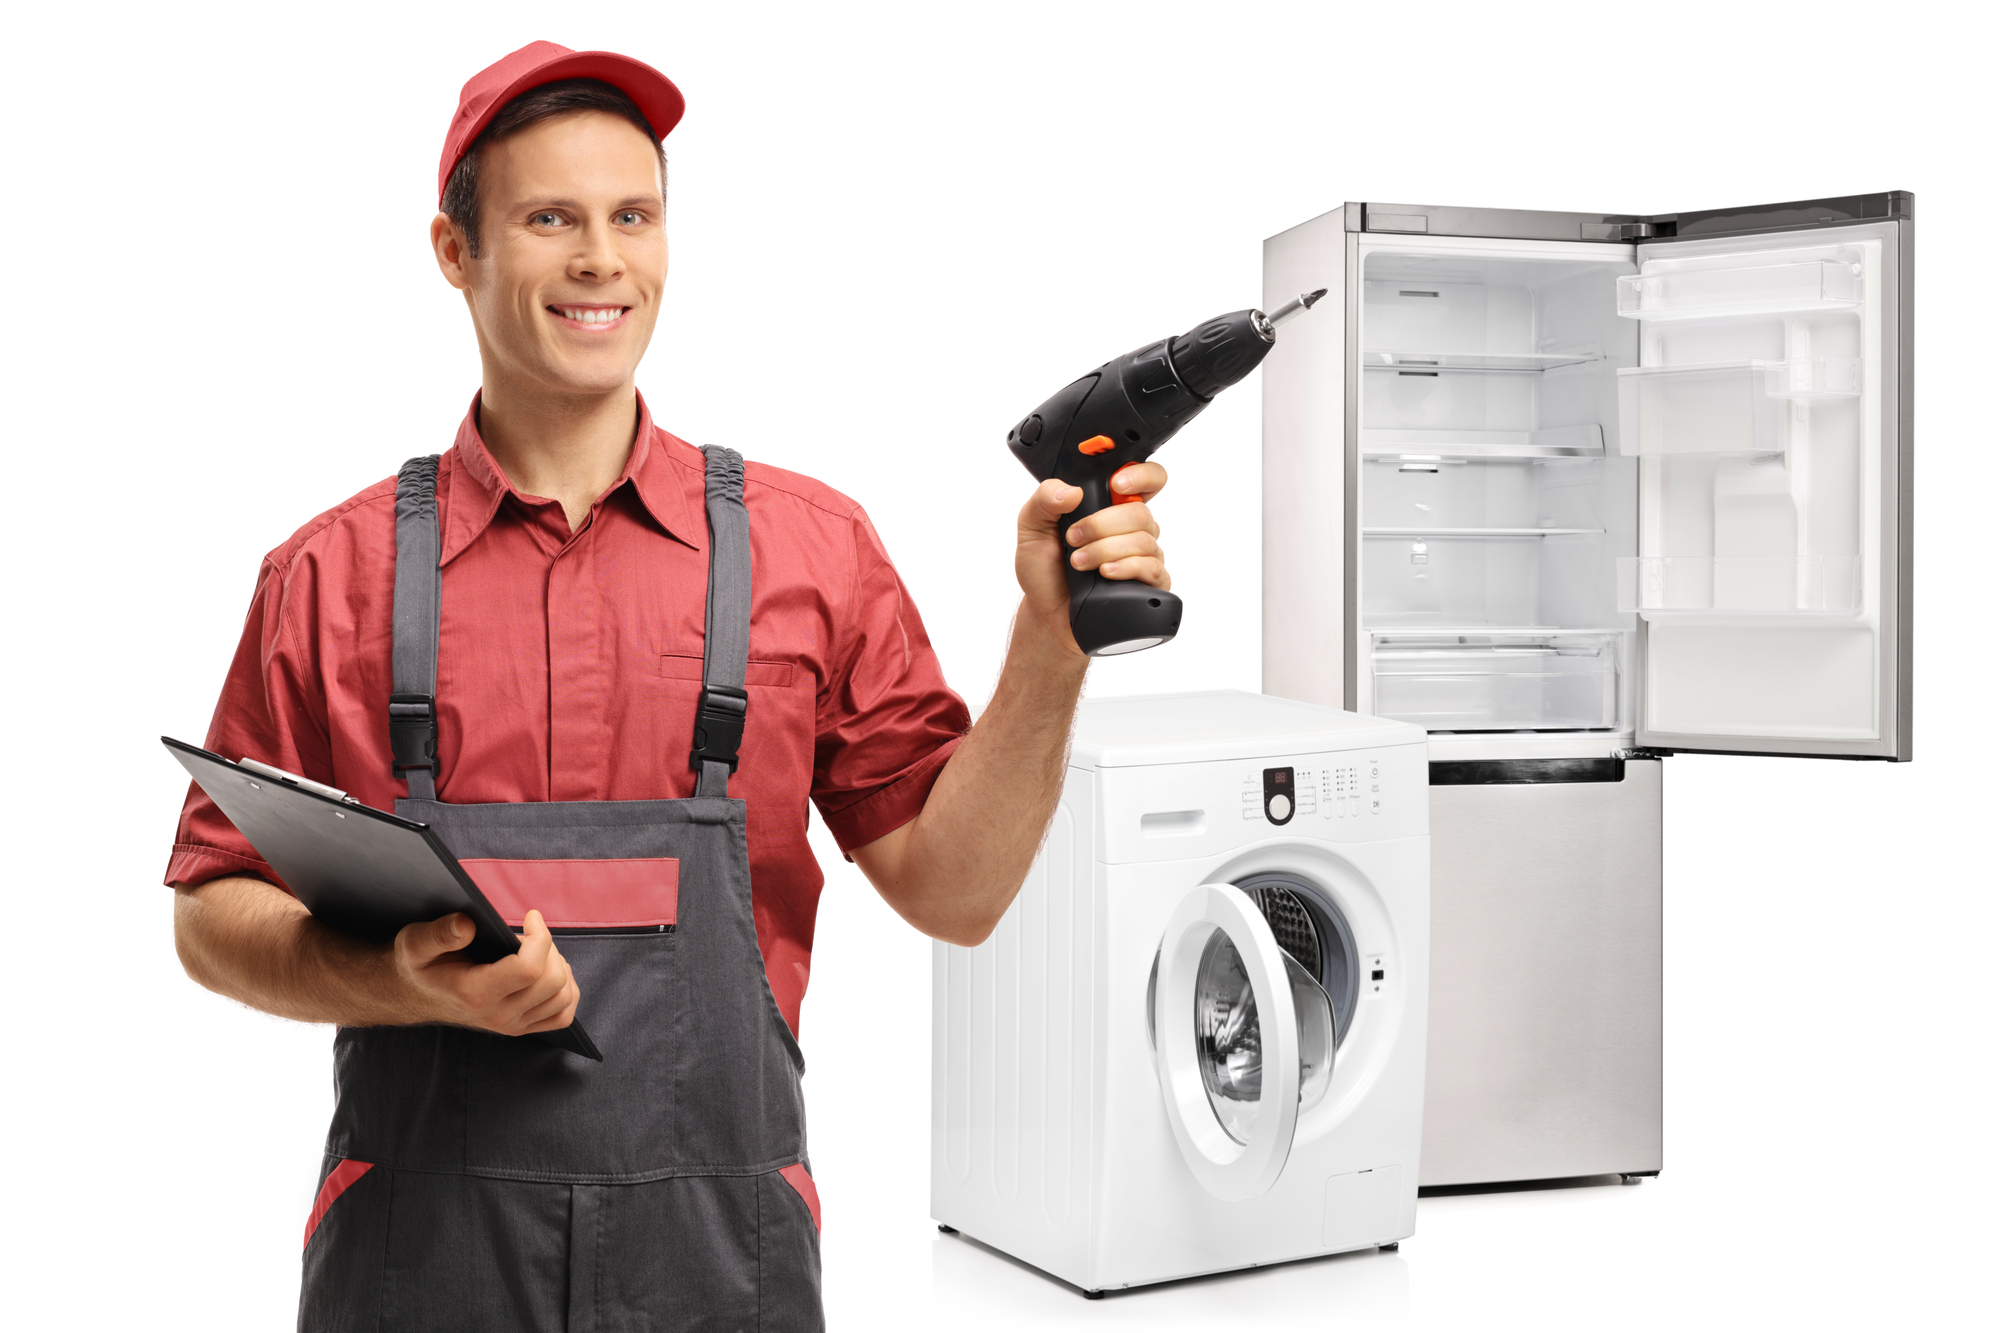 Saqmsung Appliance repairs Regina, LG Appliance Repairs Regina